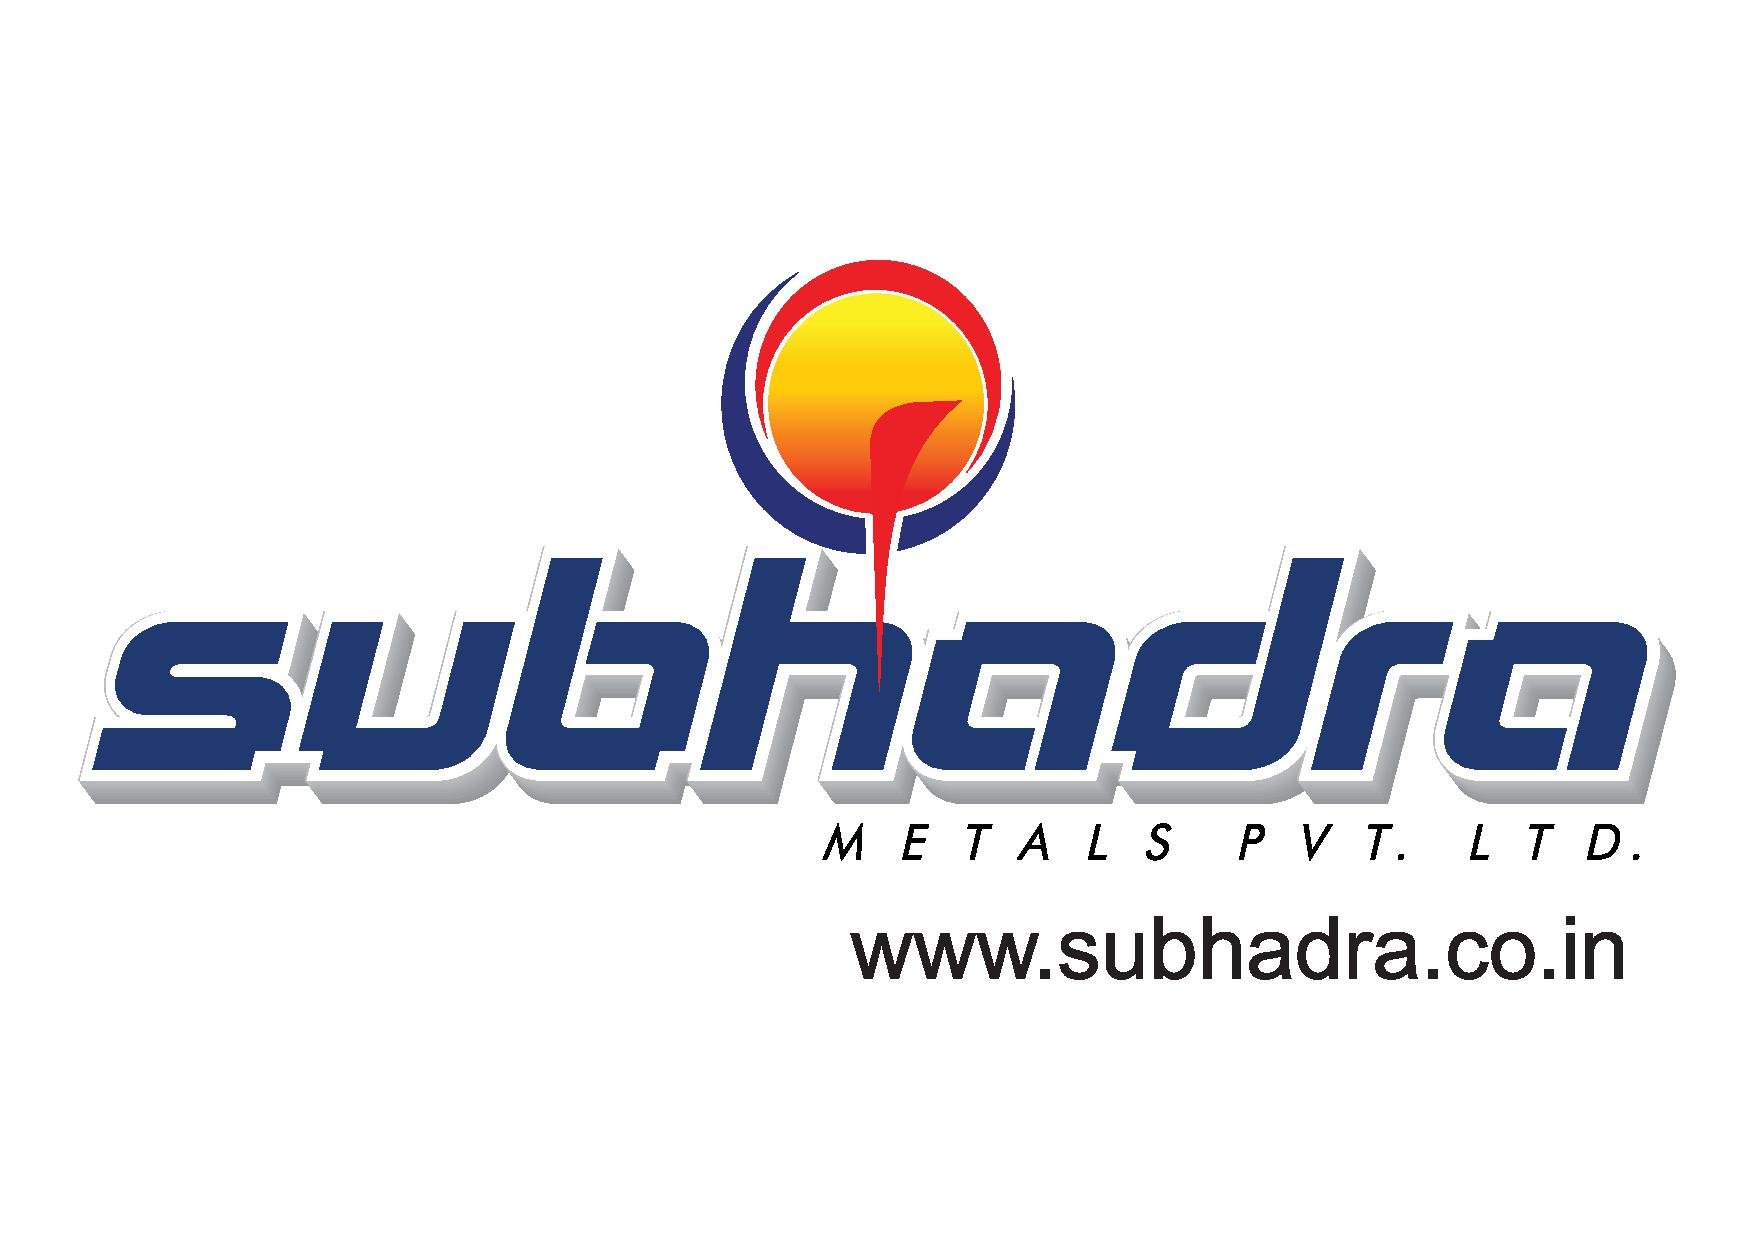 Subhadra Metals Pvt Ltd